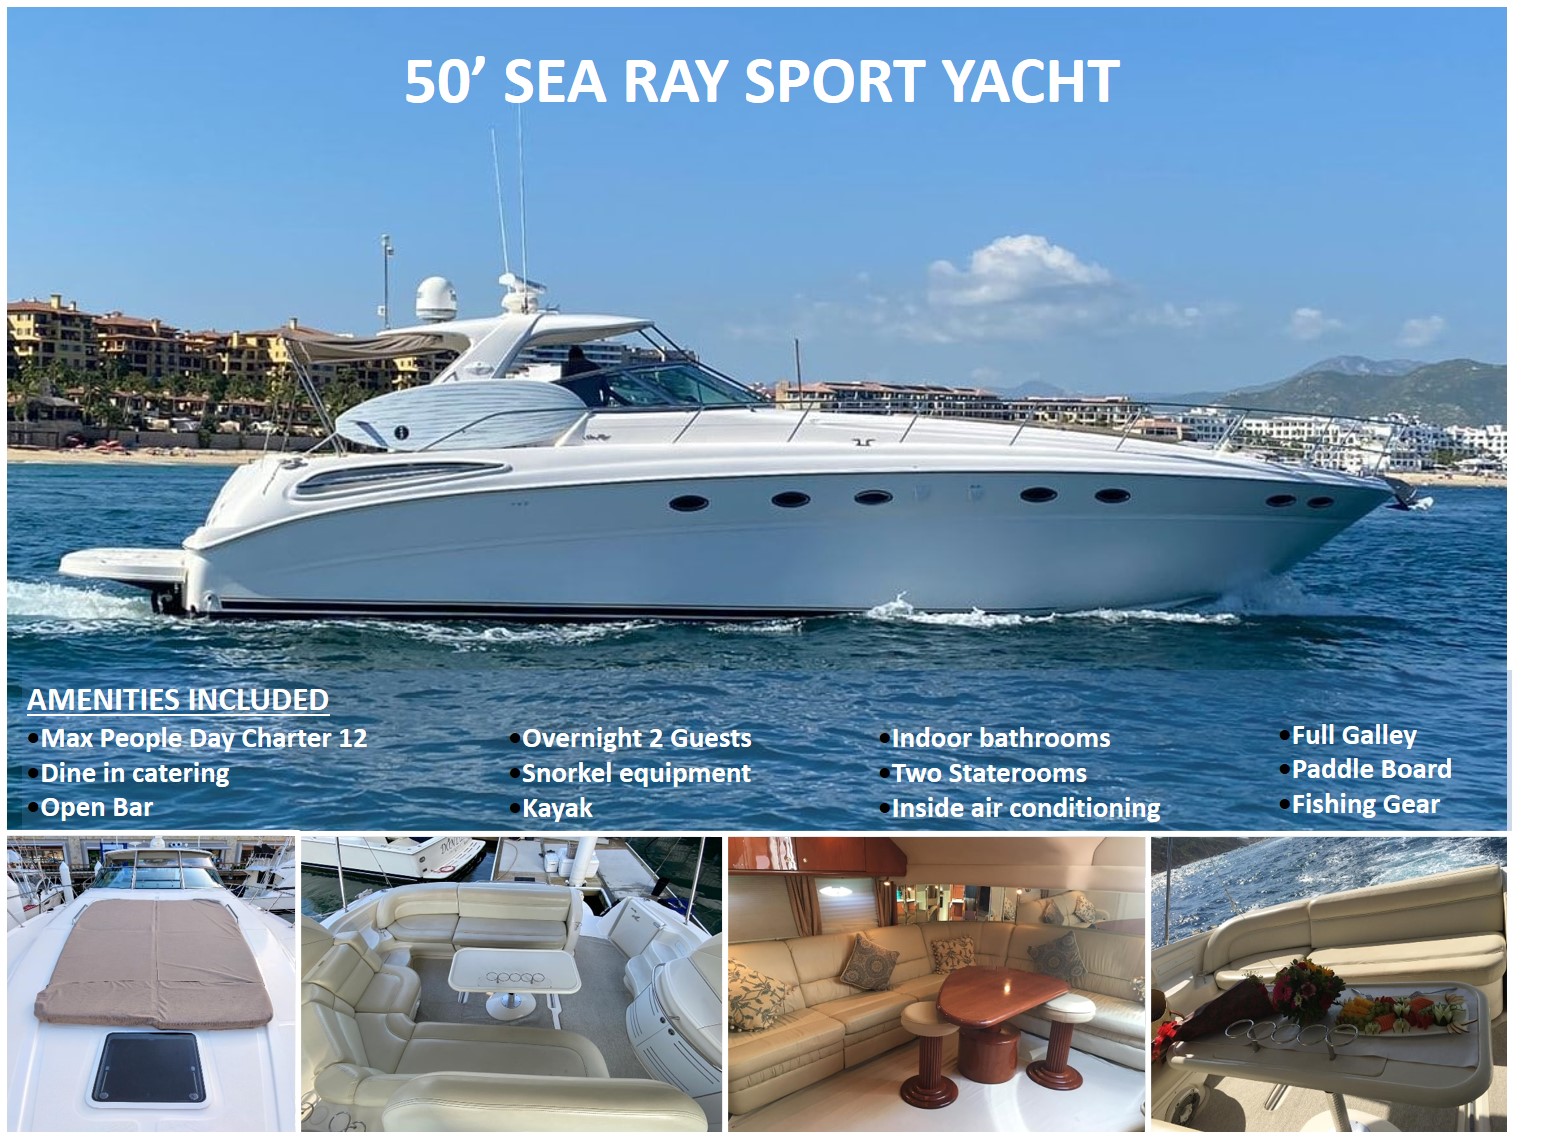 50' Sea Ray Sport Yacht